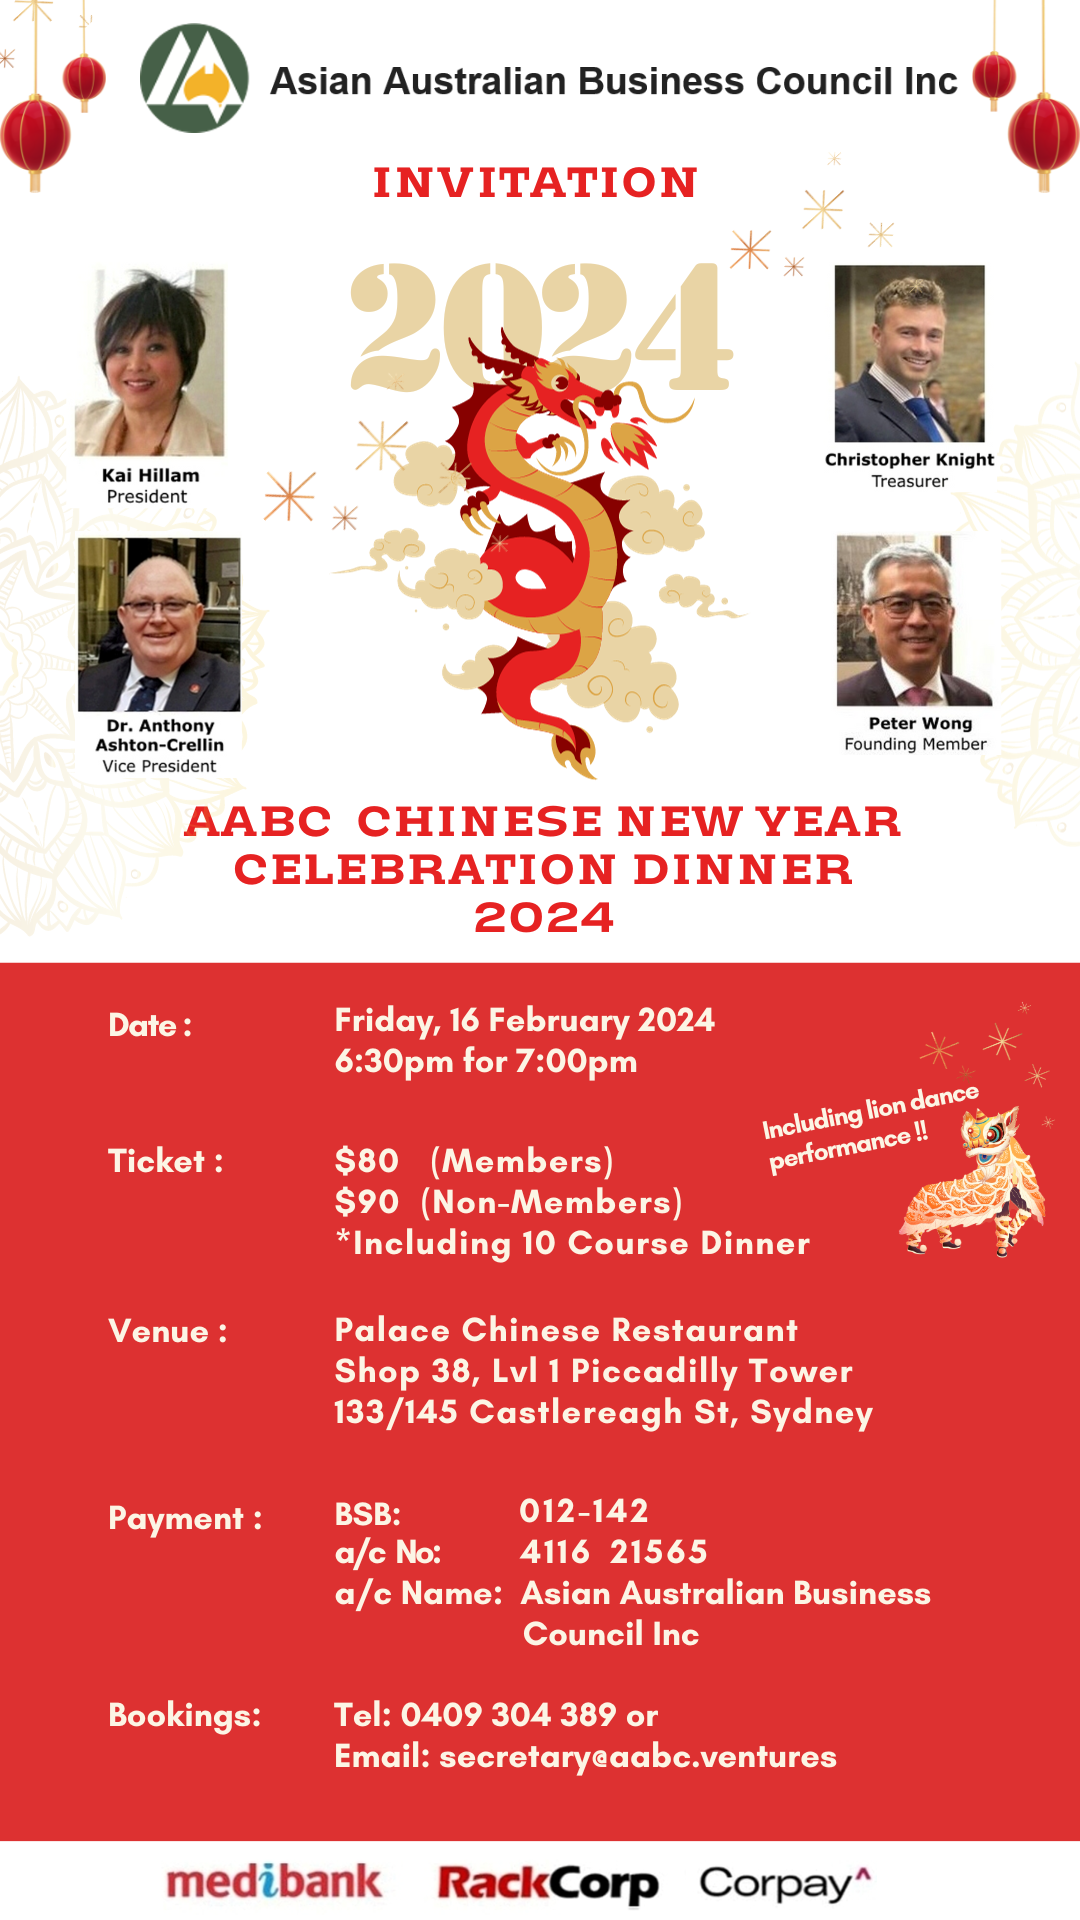 AABC Chinese New Year Celebration